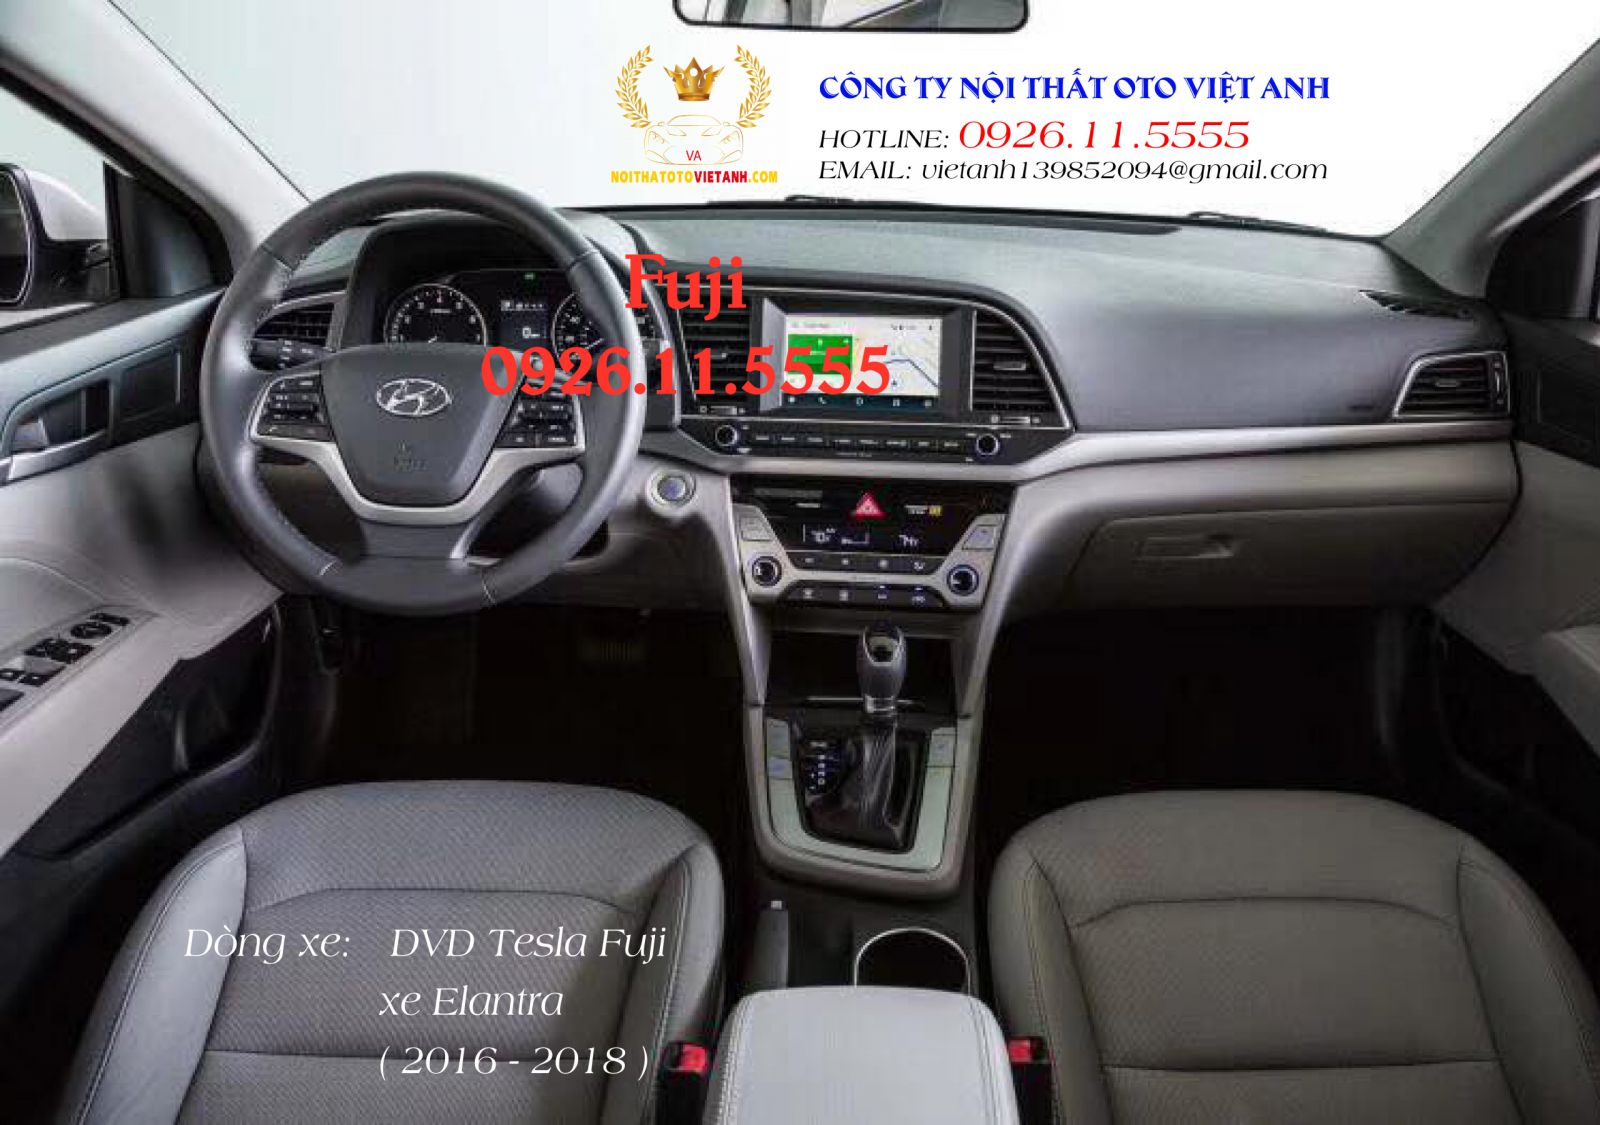 DVD Tesla Fuji theo xe Hyundai Elantra